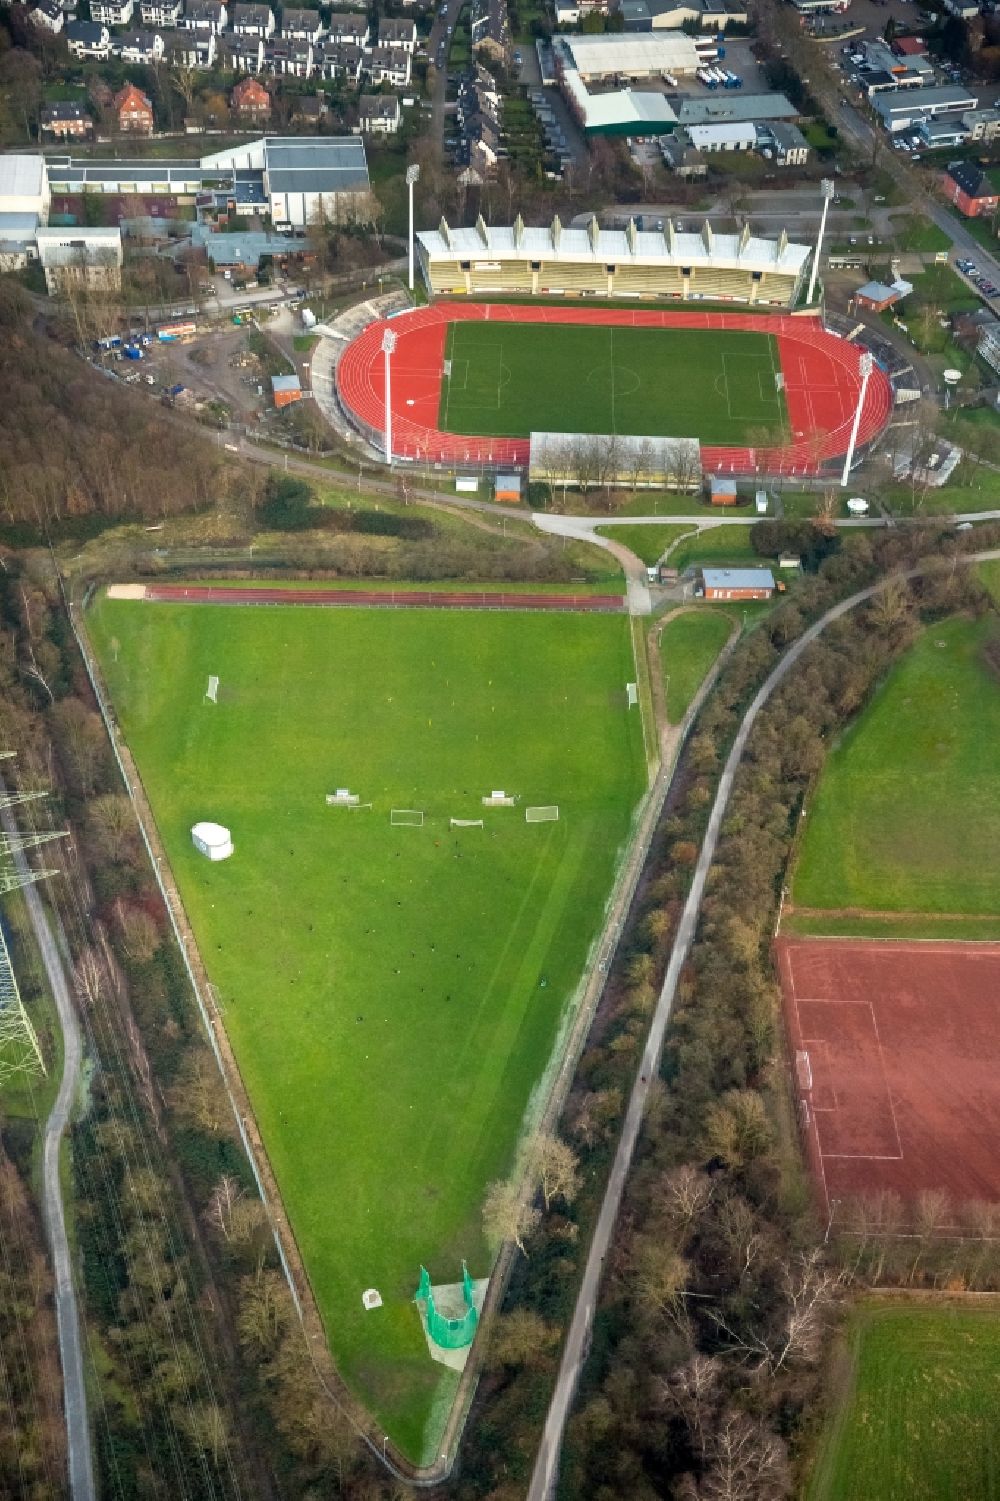 Aerial photograph Bochum - Olympic base with sports halls and boarding school at Lohrheidestadion located in Bochum Wattenscheid district in North Rhine-Westphalia